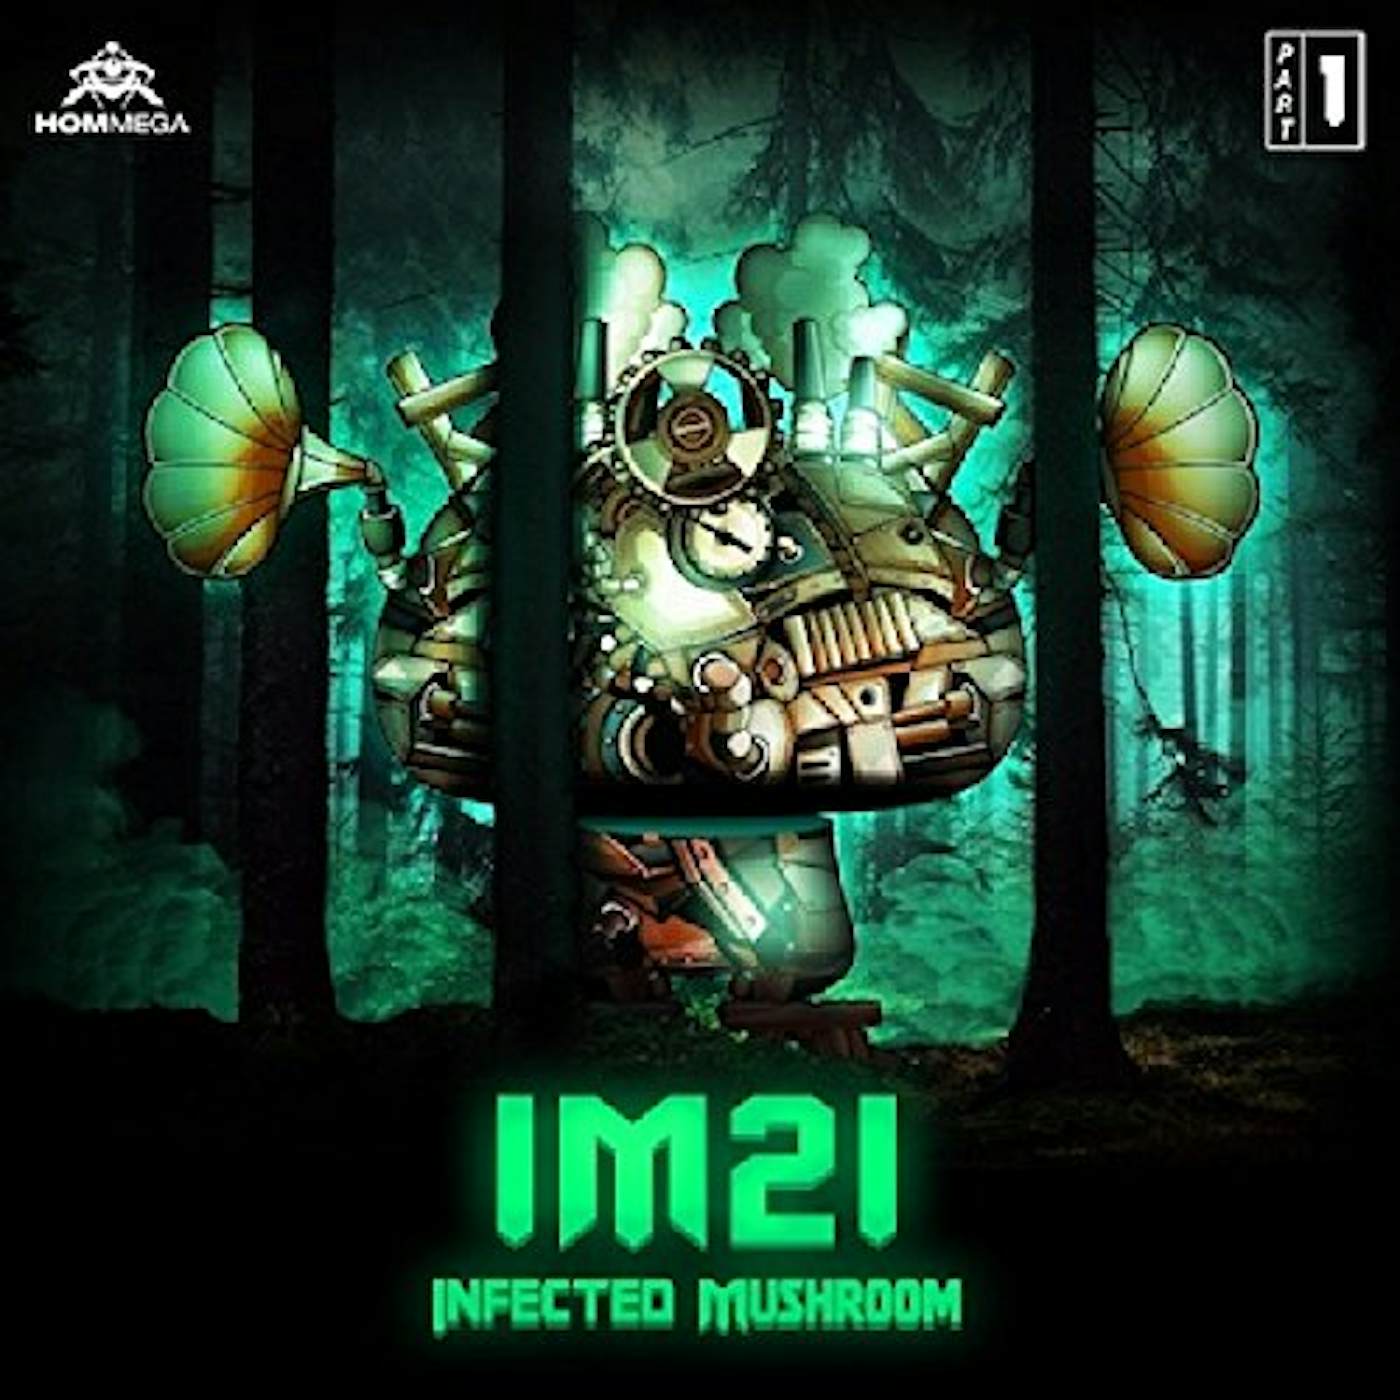 Infected Mushroom IM21 CD